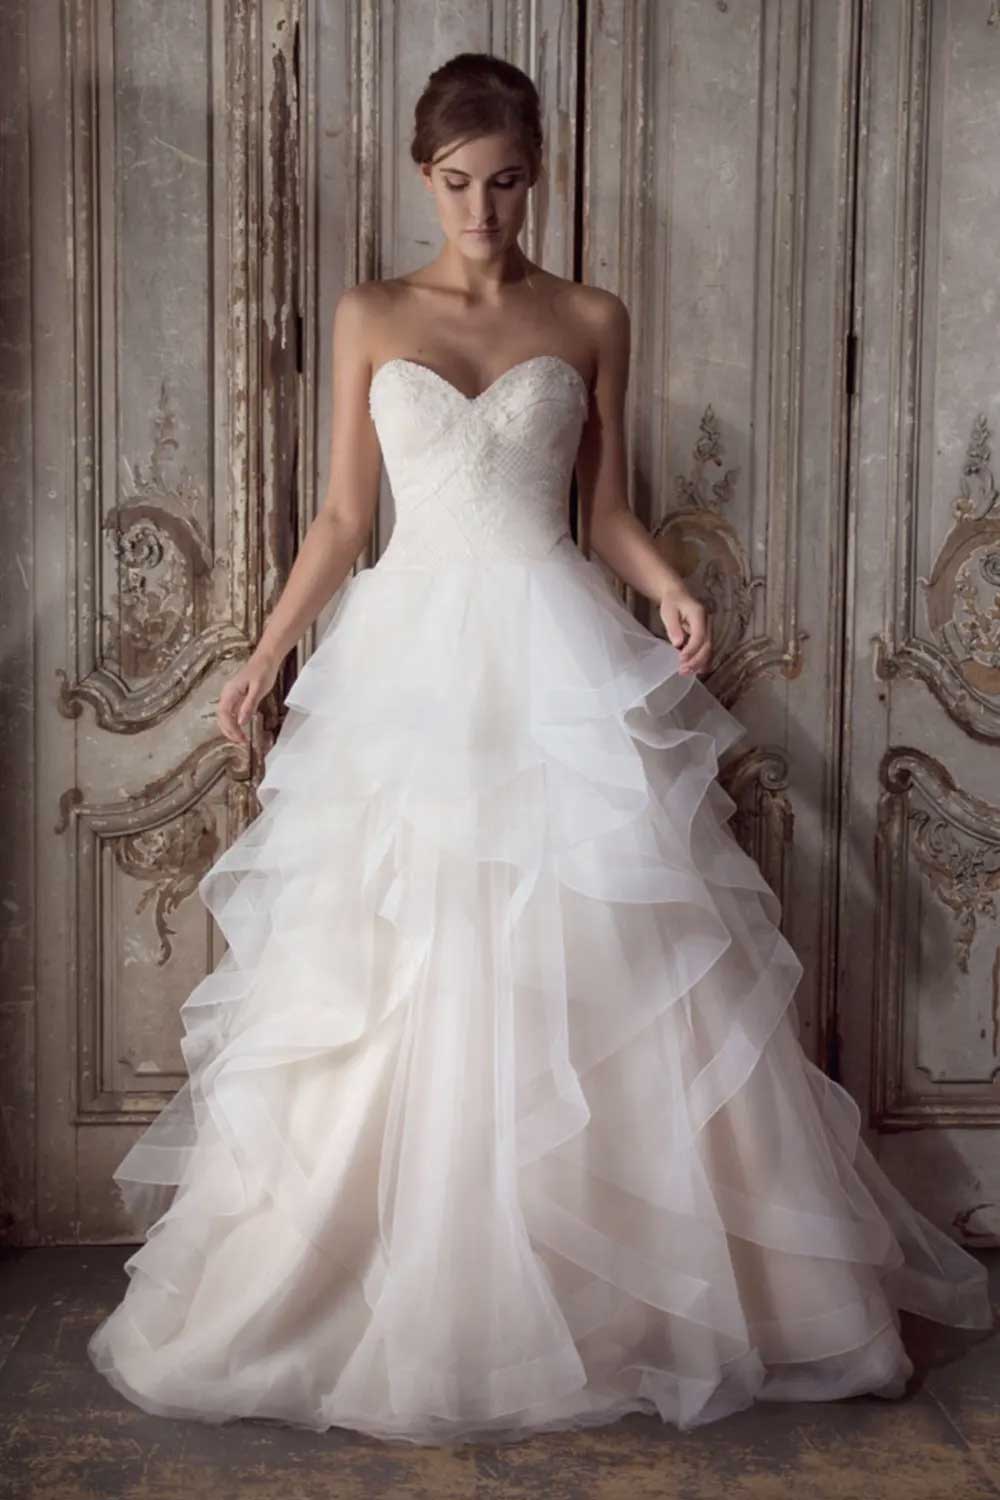 Corset style wedding dress